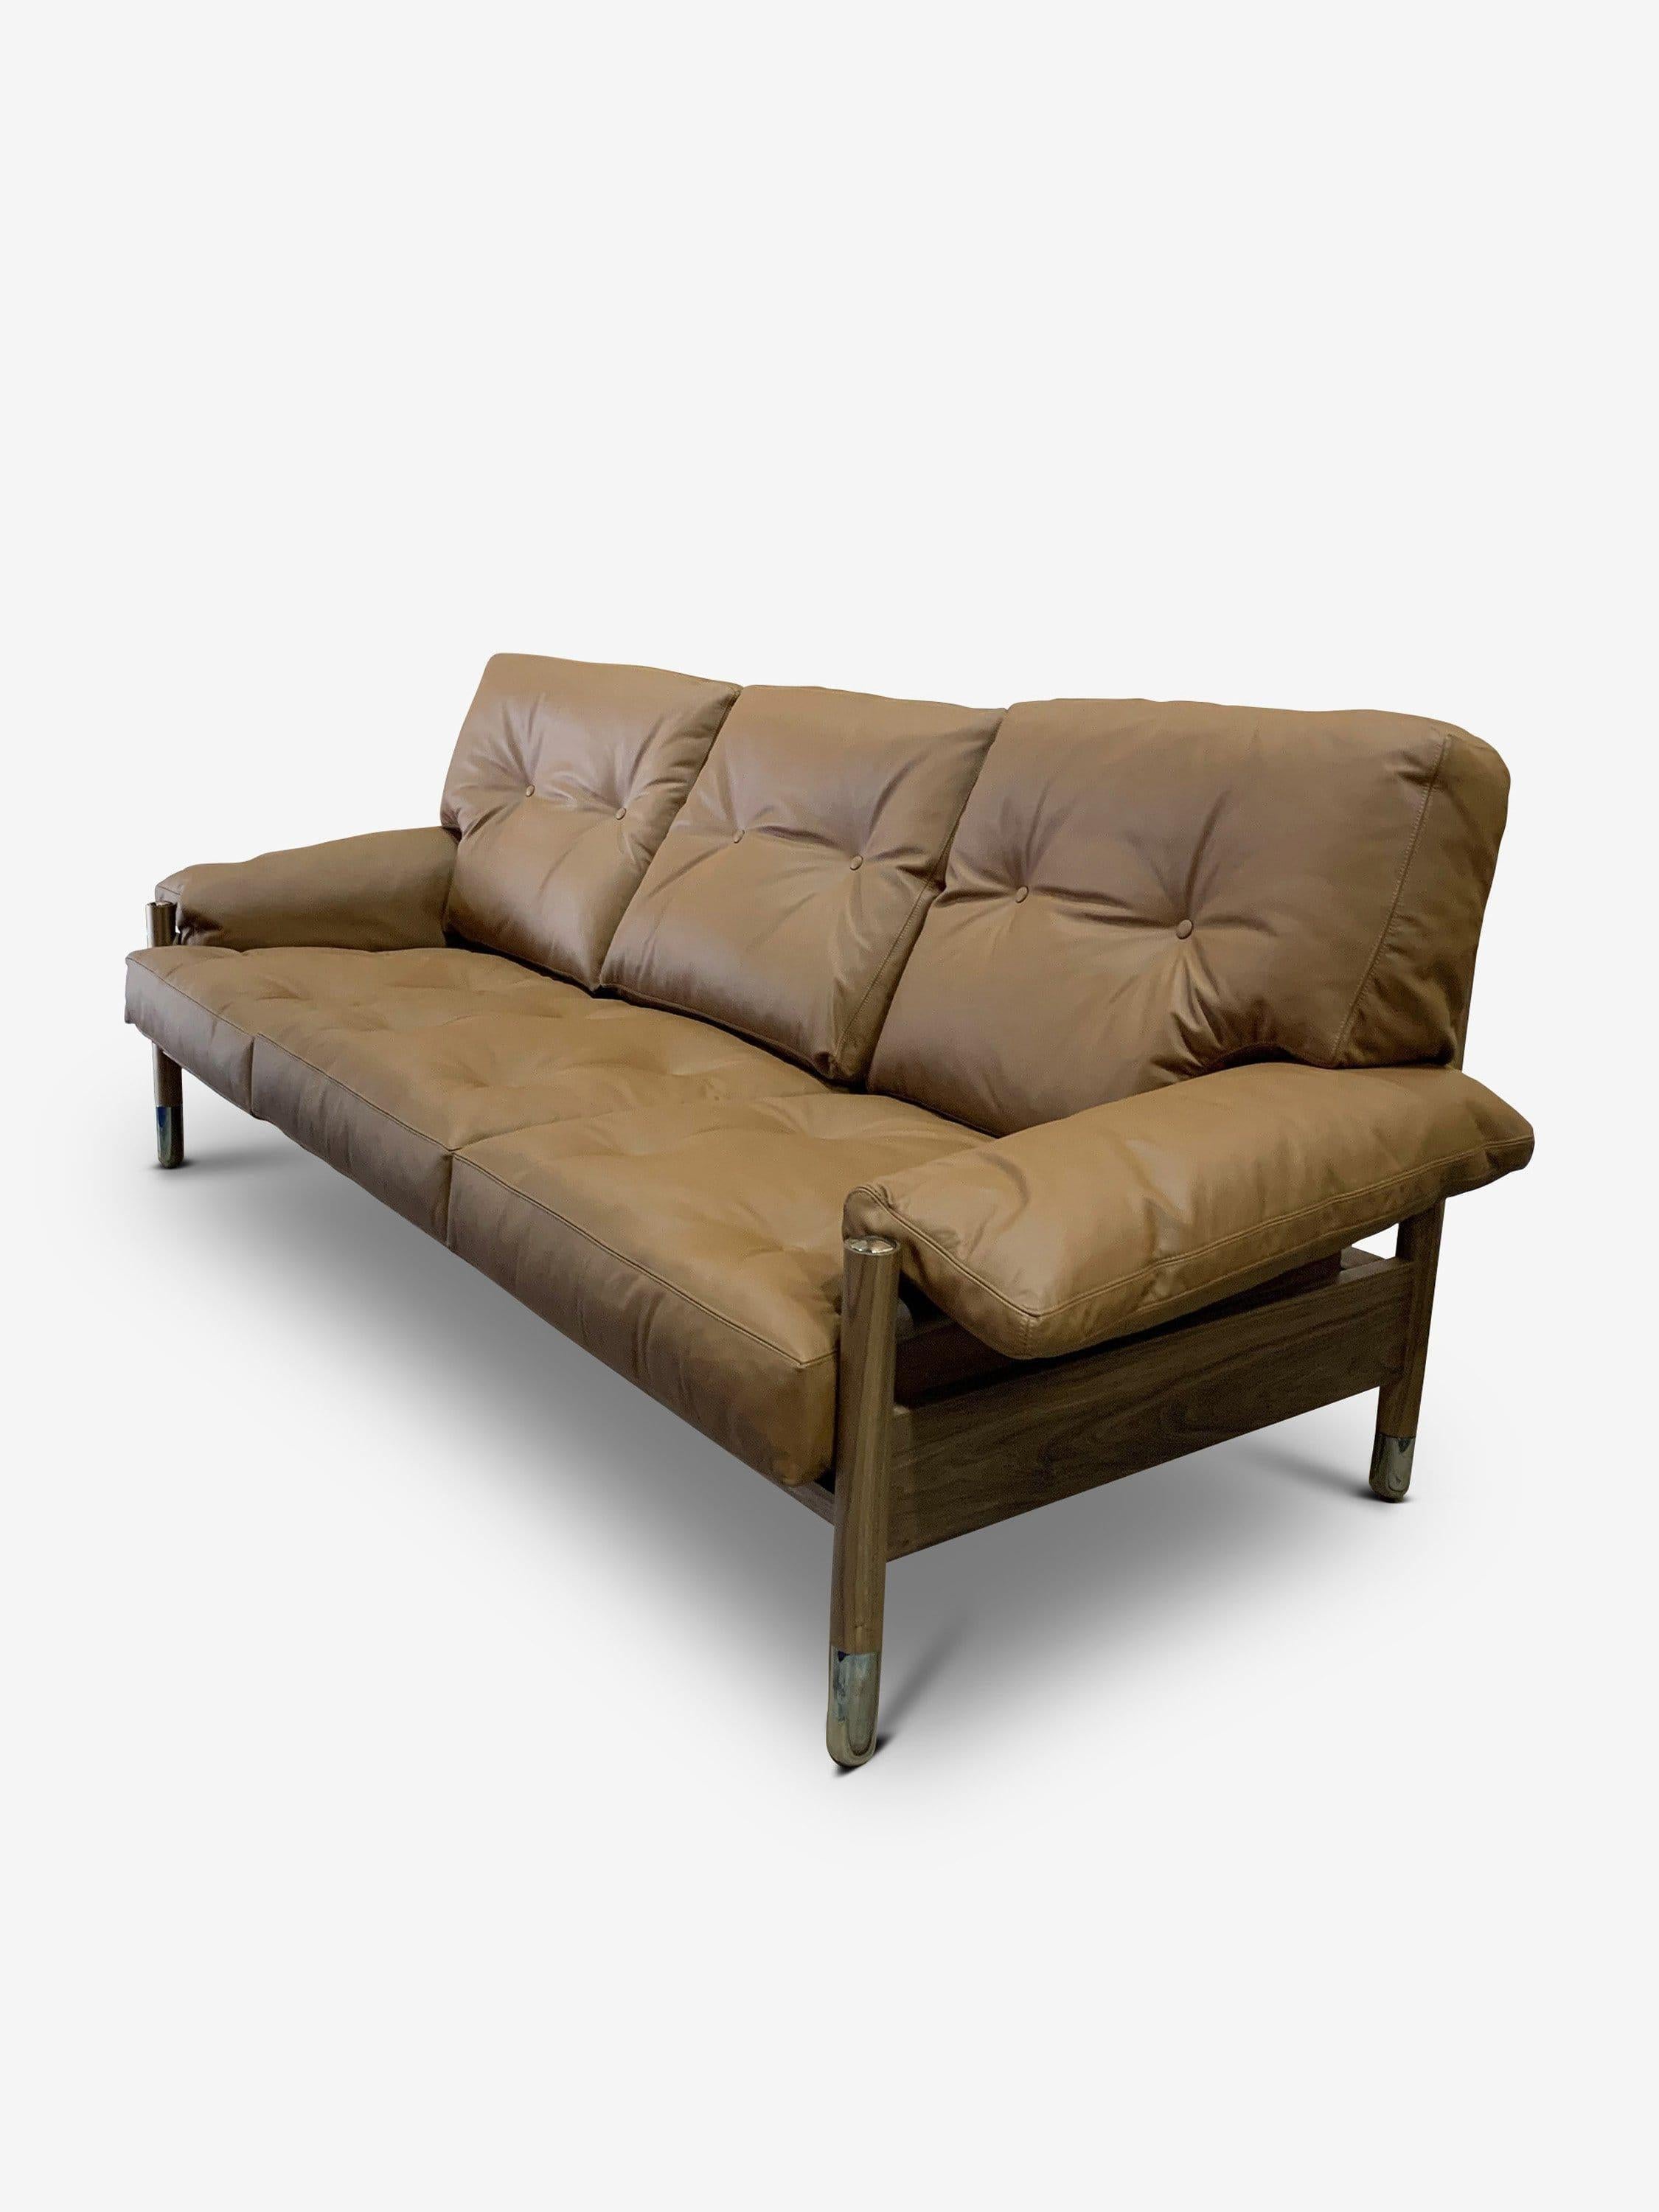 Leather Sella Sofa For Sale